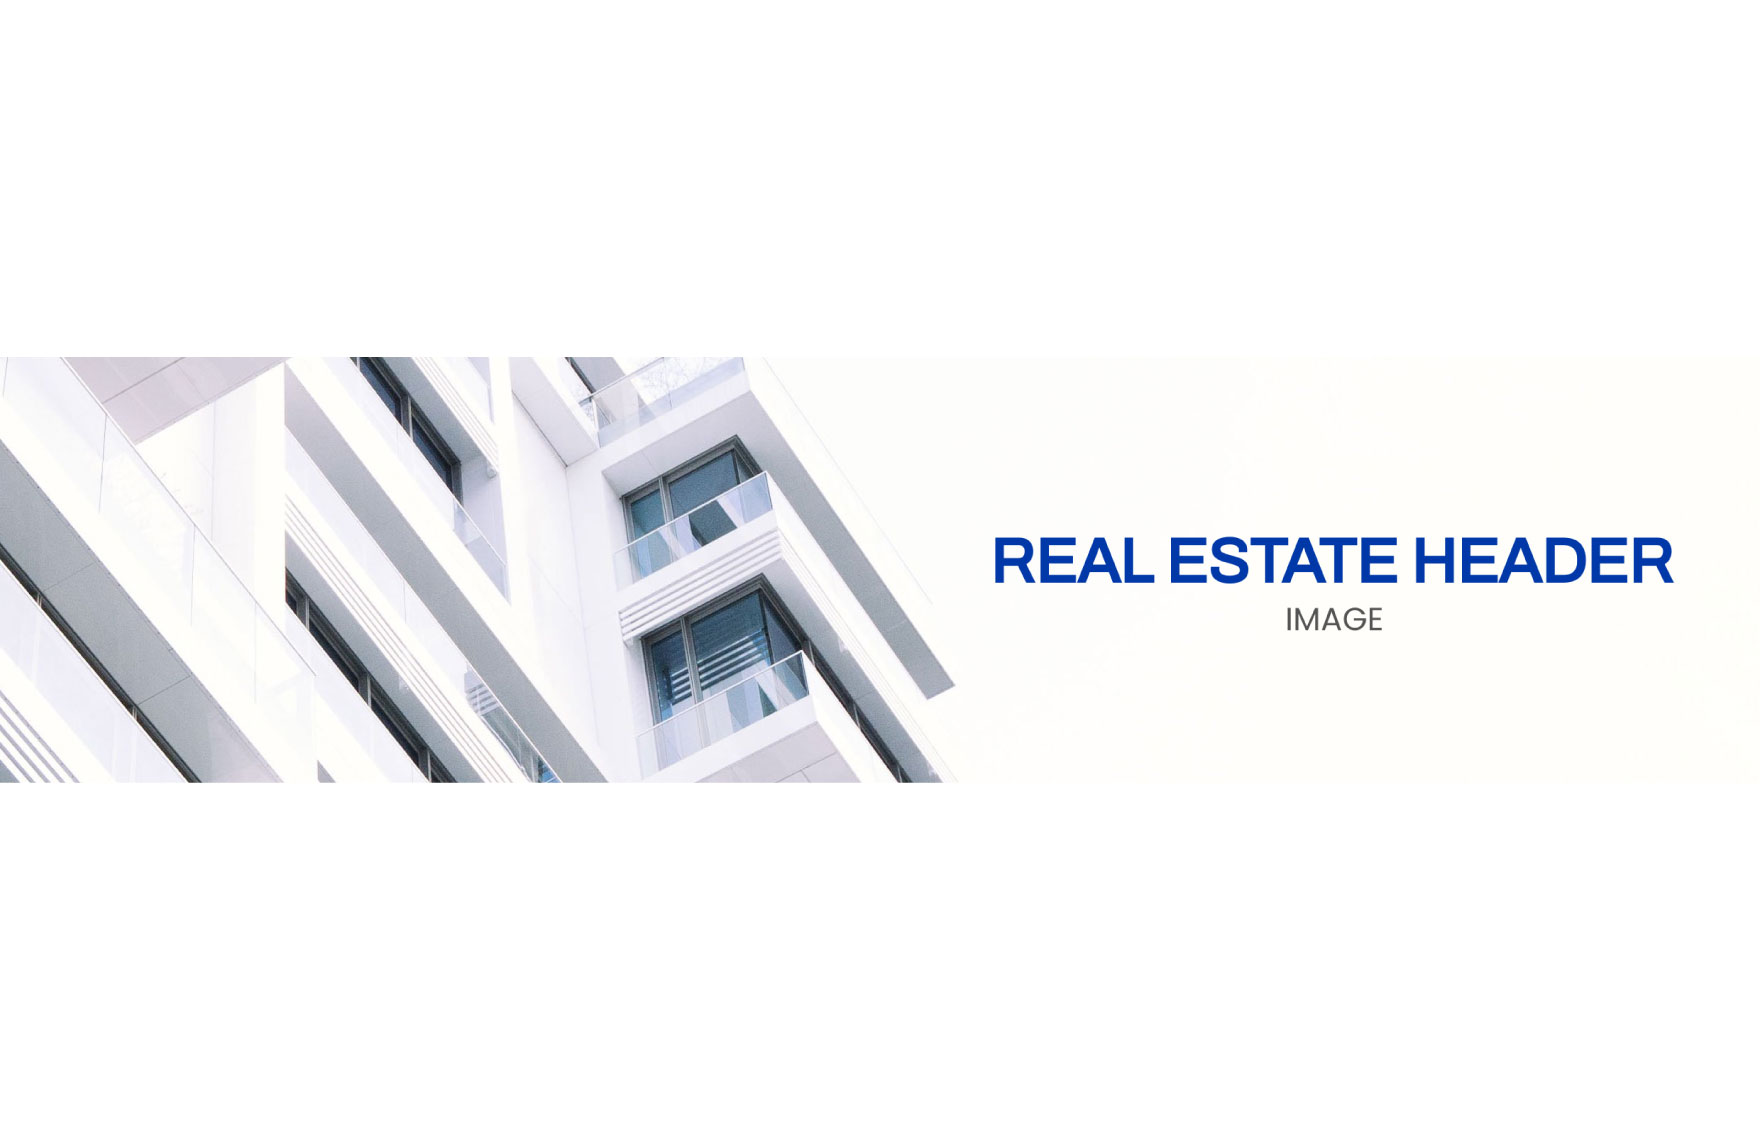 Real Estate Header Image  Template